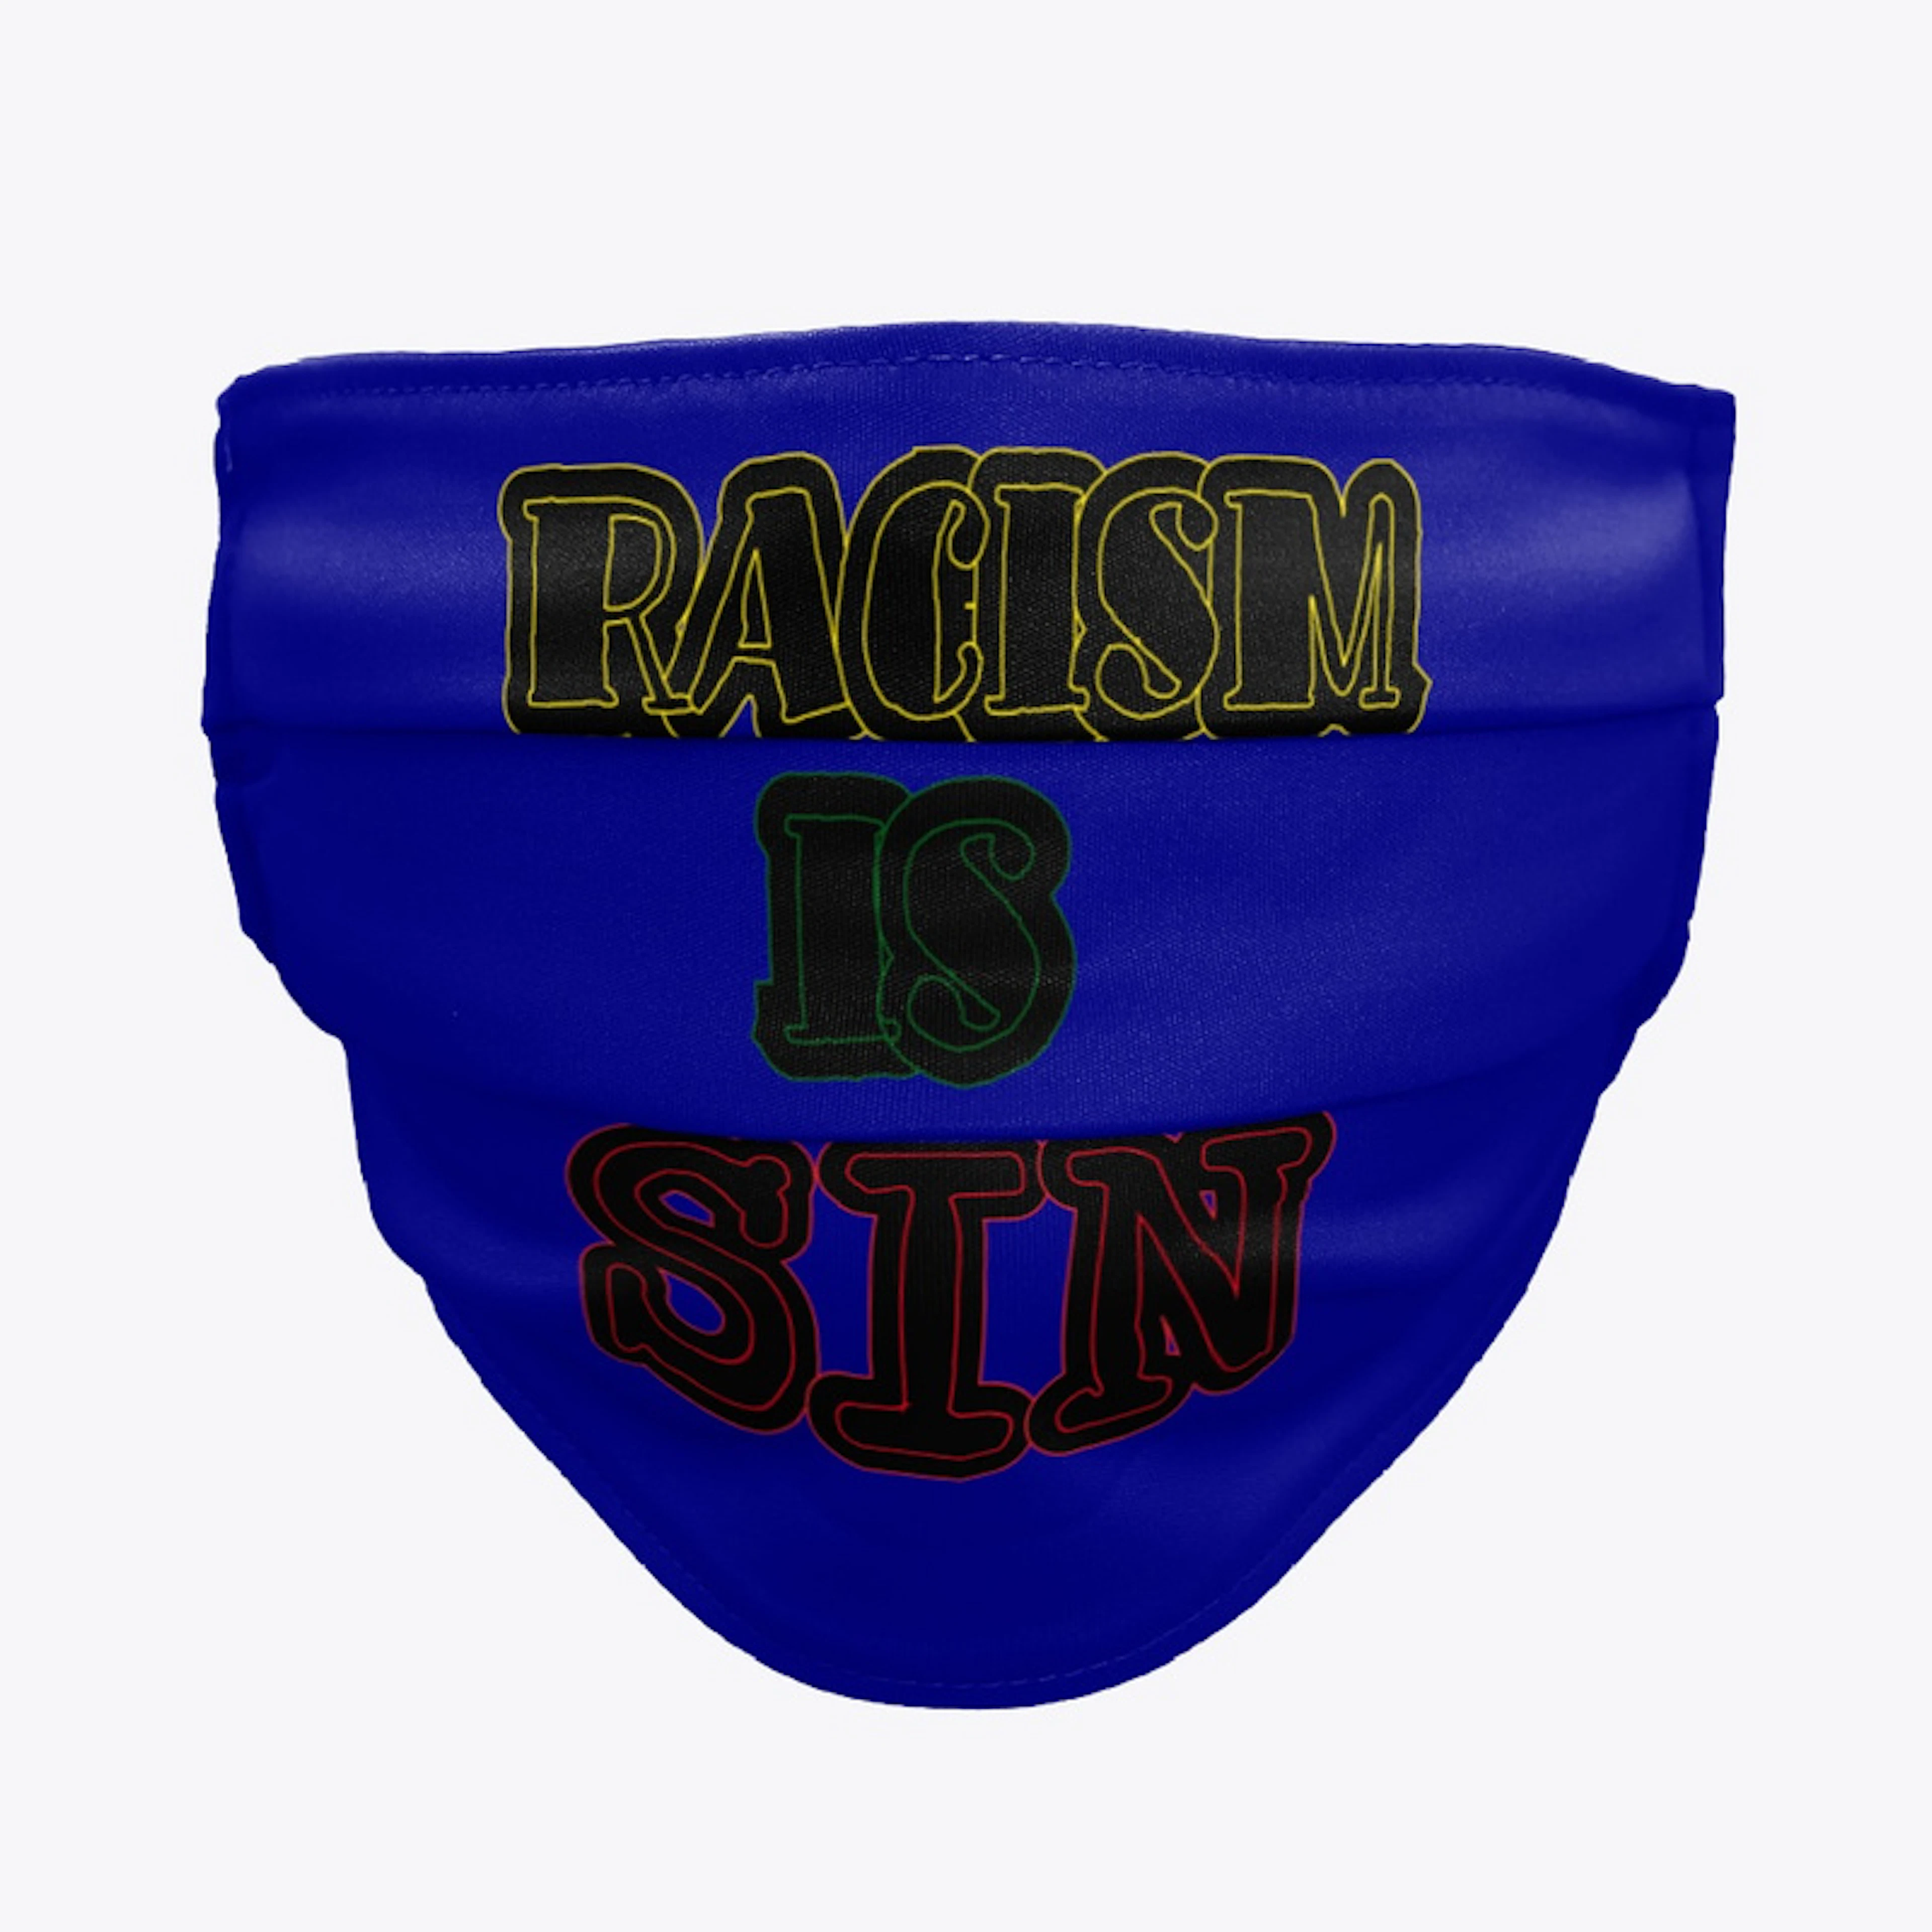 Racism is Sin